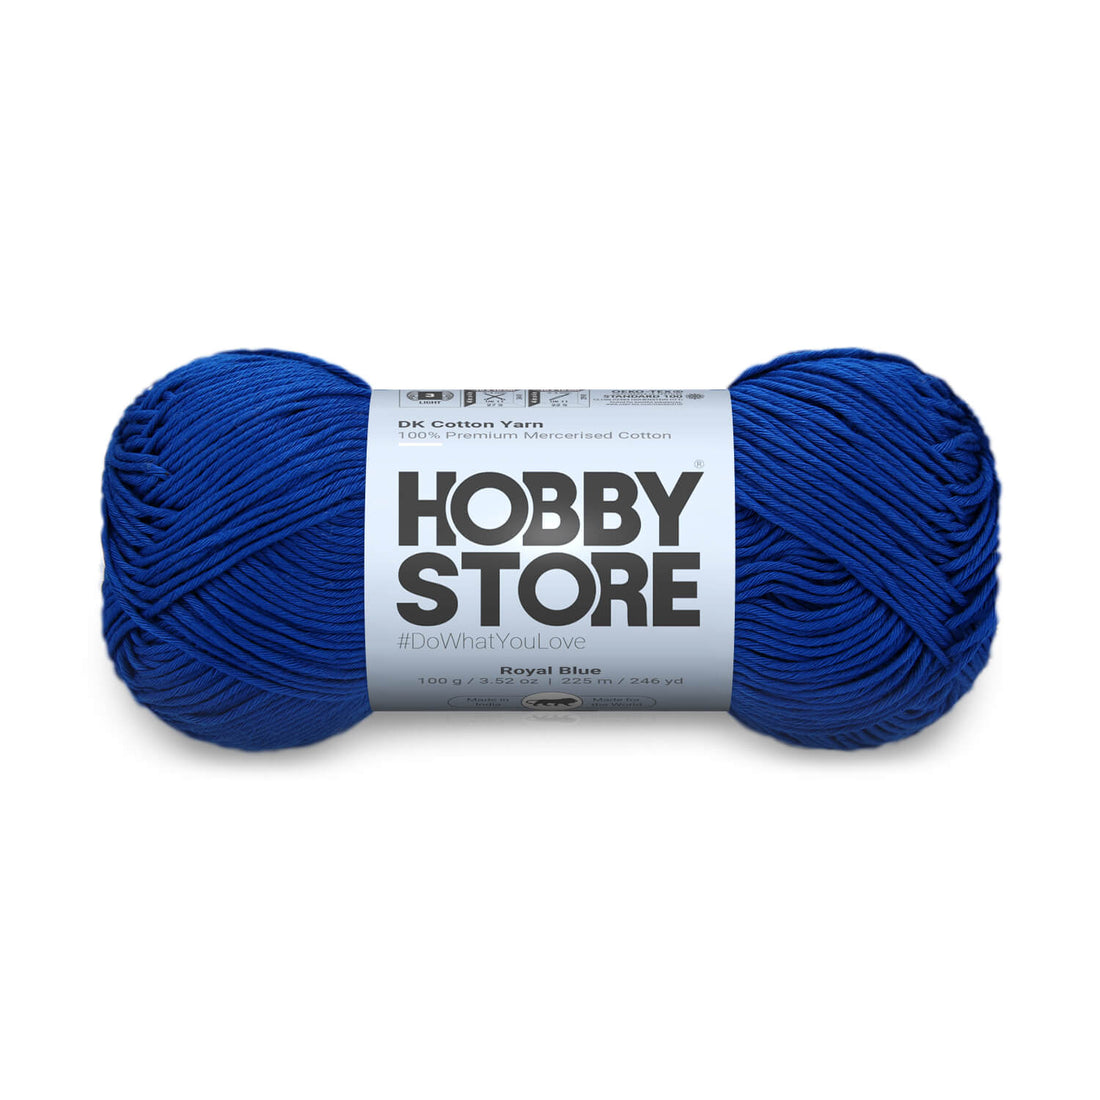 DK Mercerised Cotton Yarn by Hobby Store - Royal Blue - 339